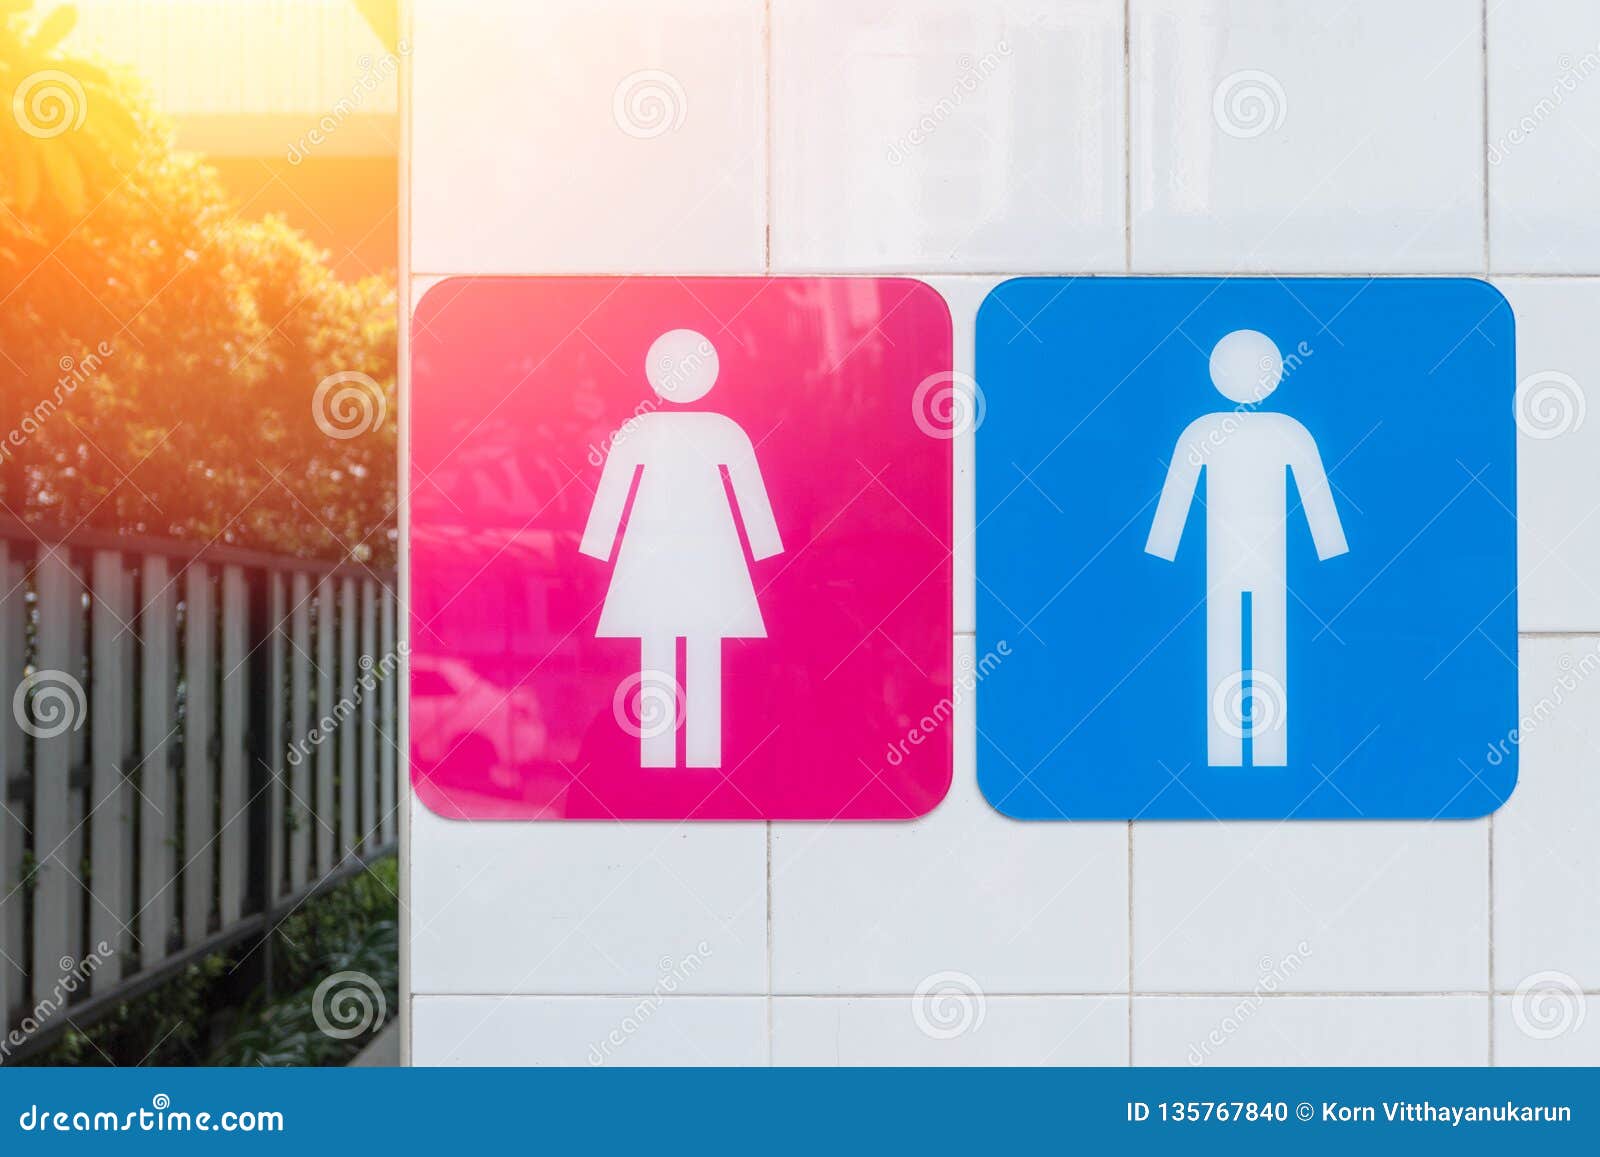 Public Toilet Sign Sex Sticker Stock Photo hq pic